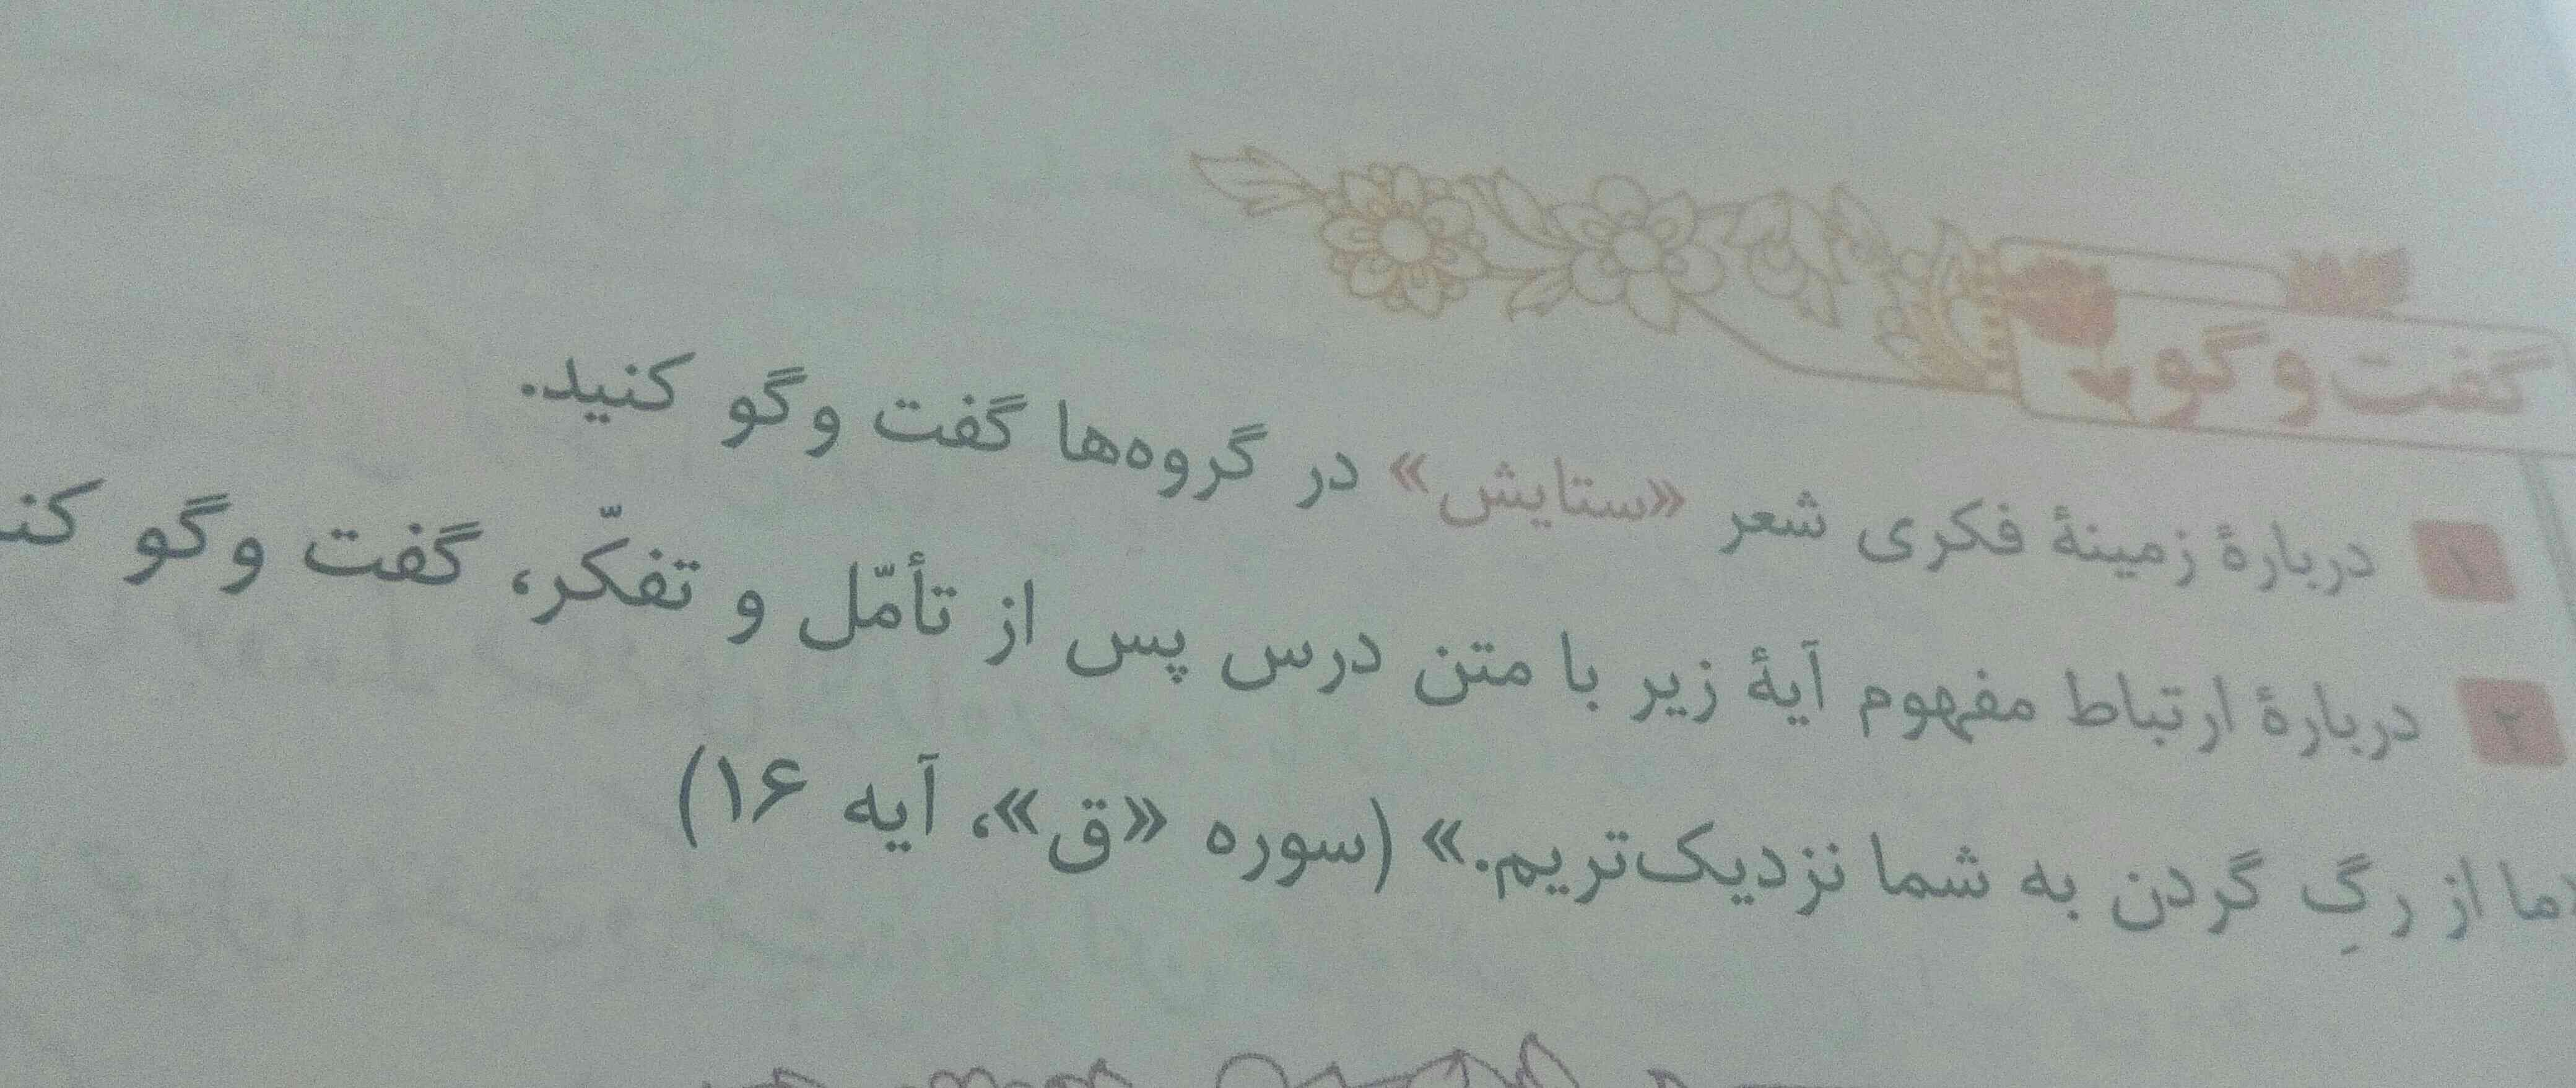 گفت وگو فارسی را اگر بنویسید.
منونممم